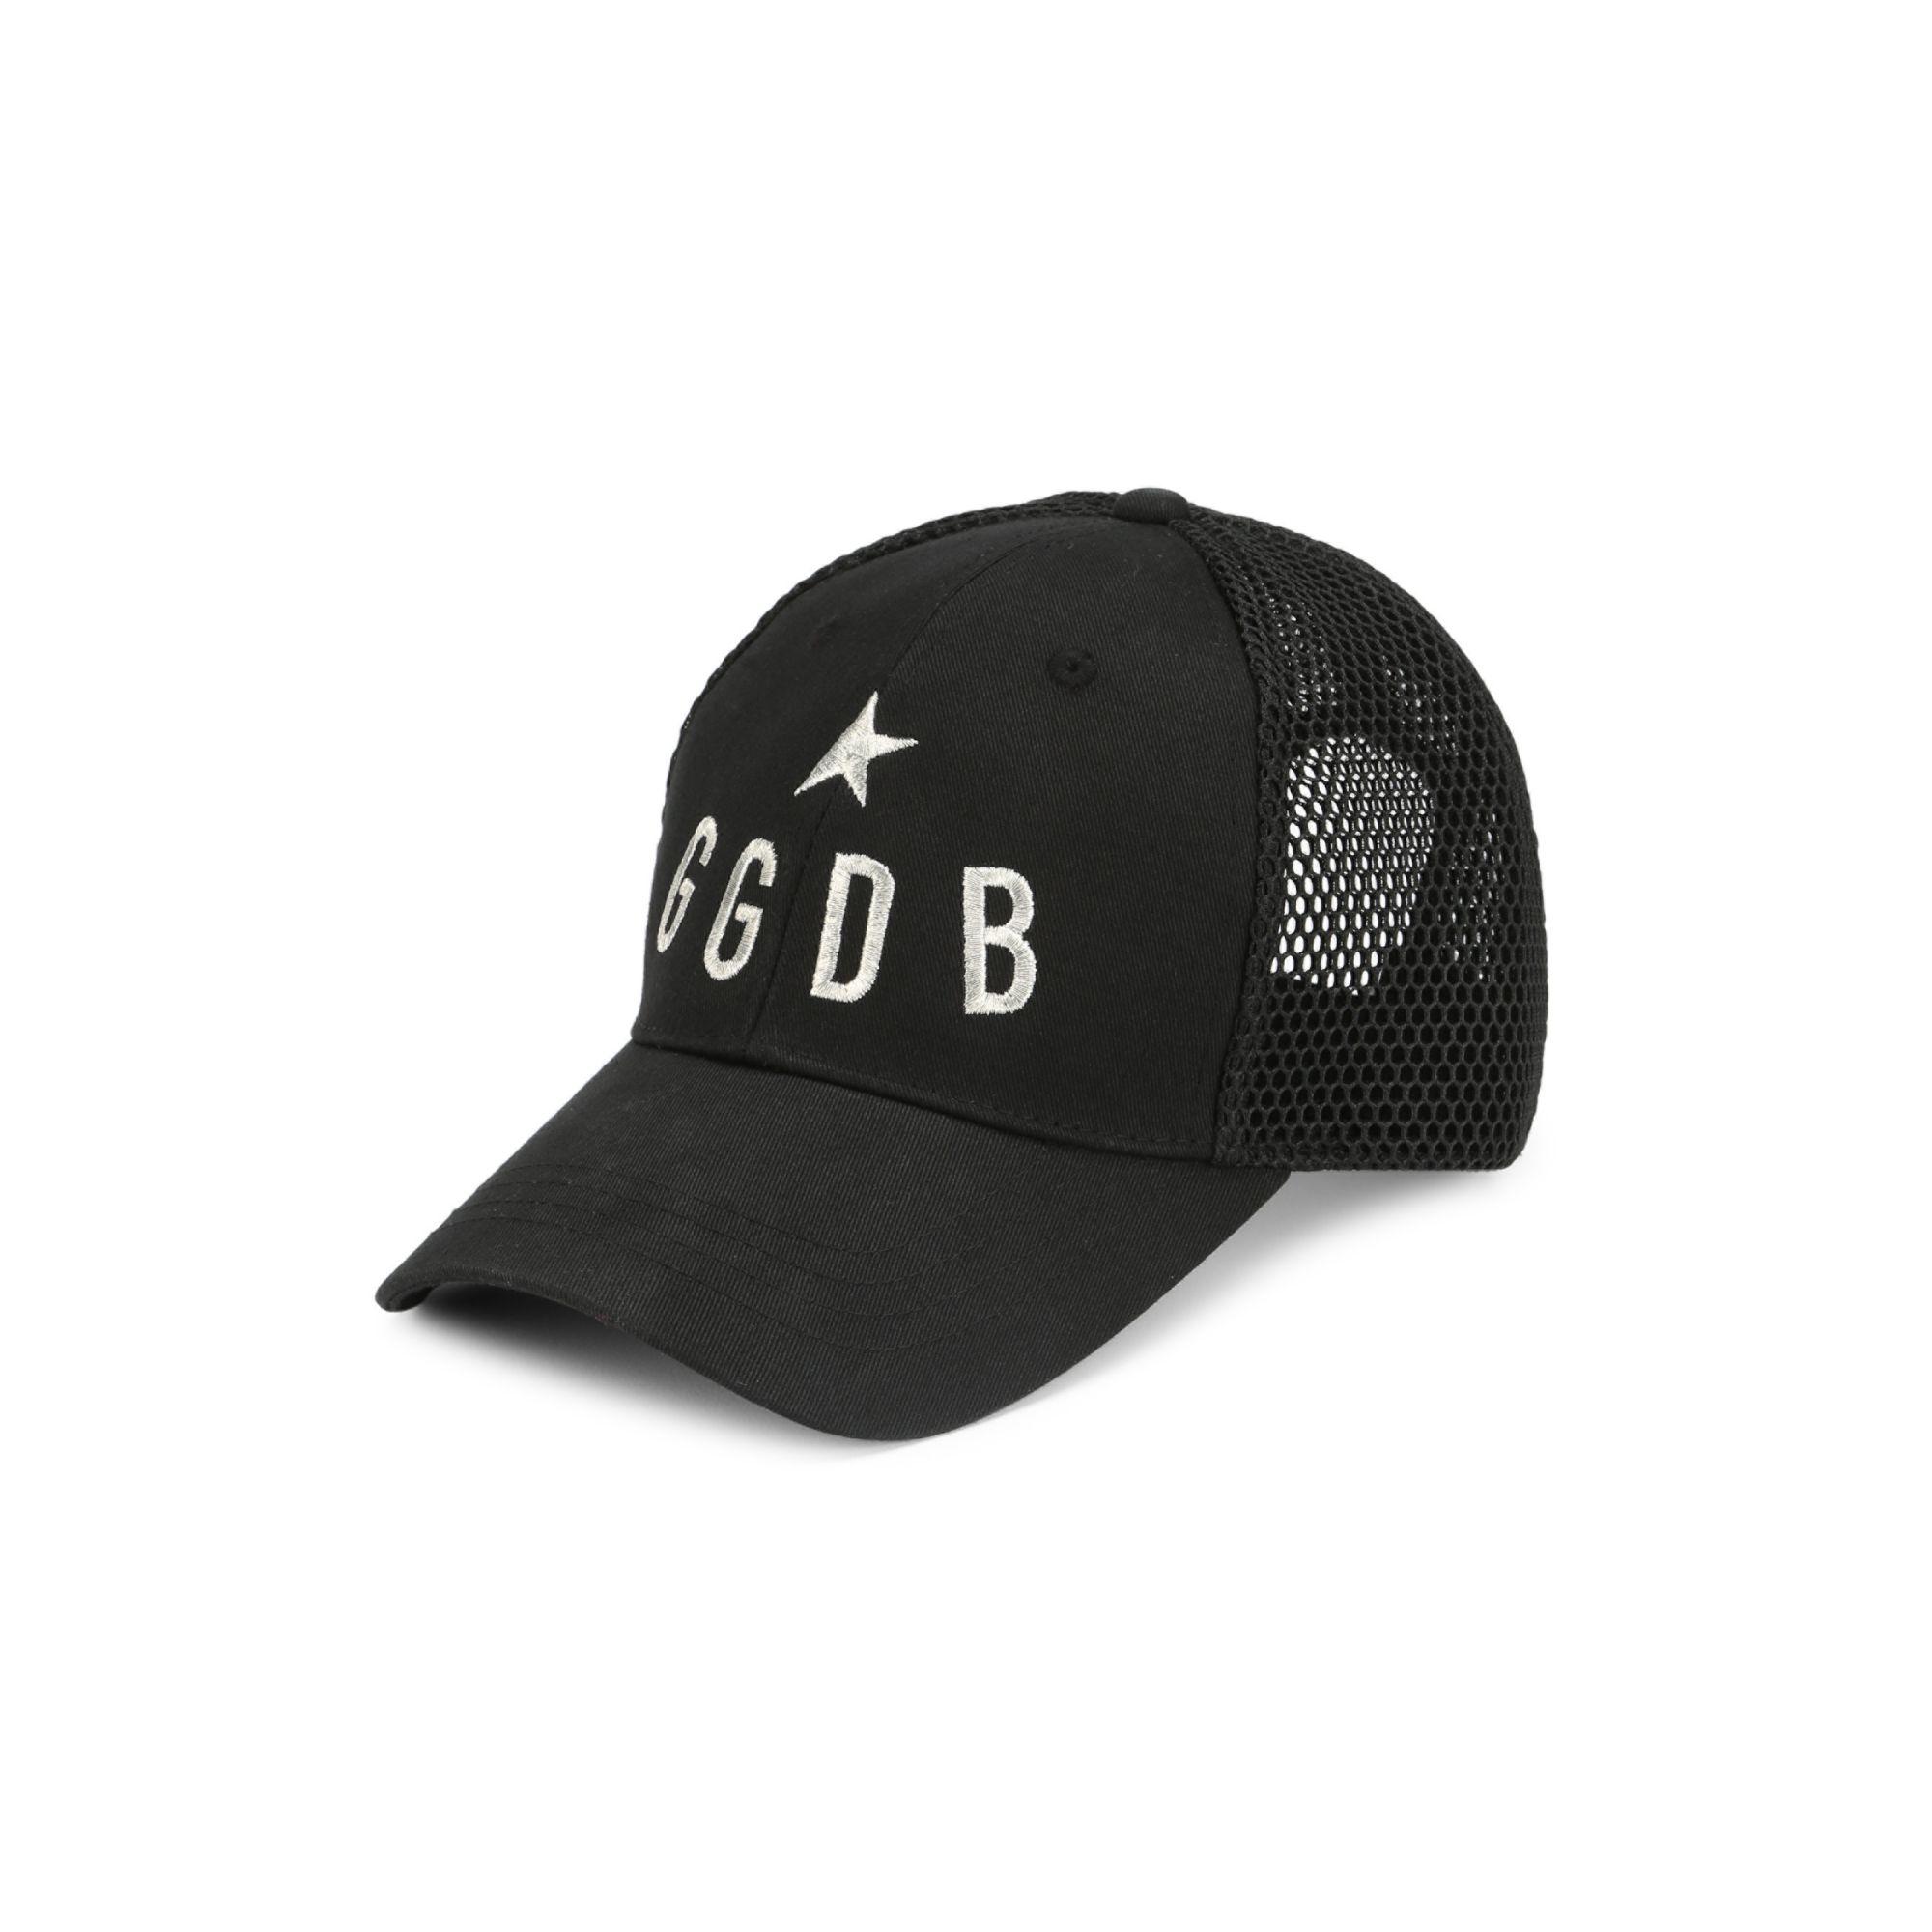 Golden Goose GGDB Embroidered Logo Baseball Cap in Black for Men